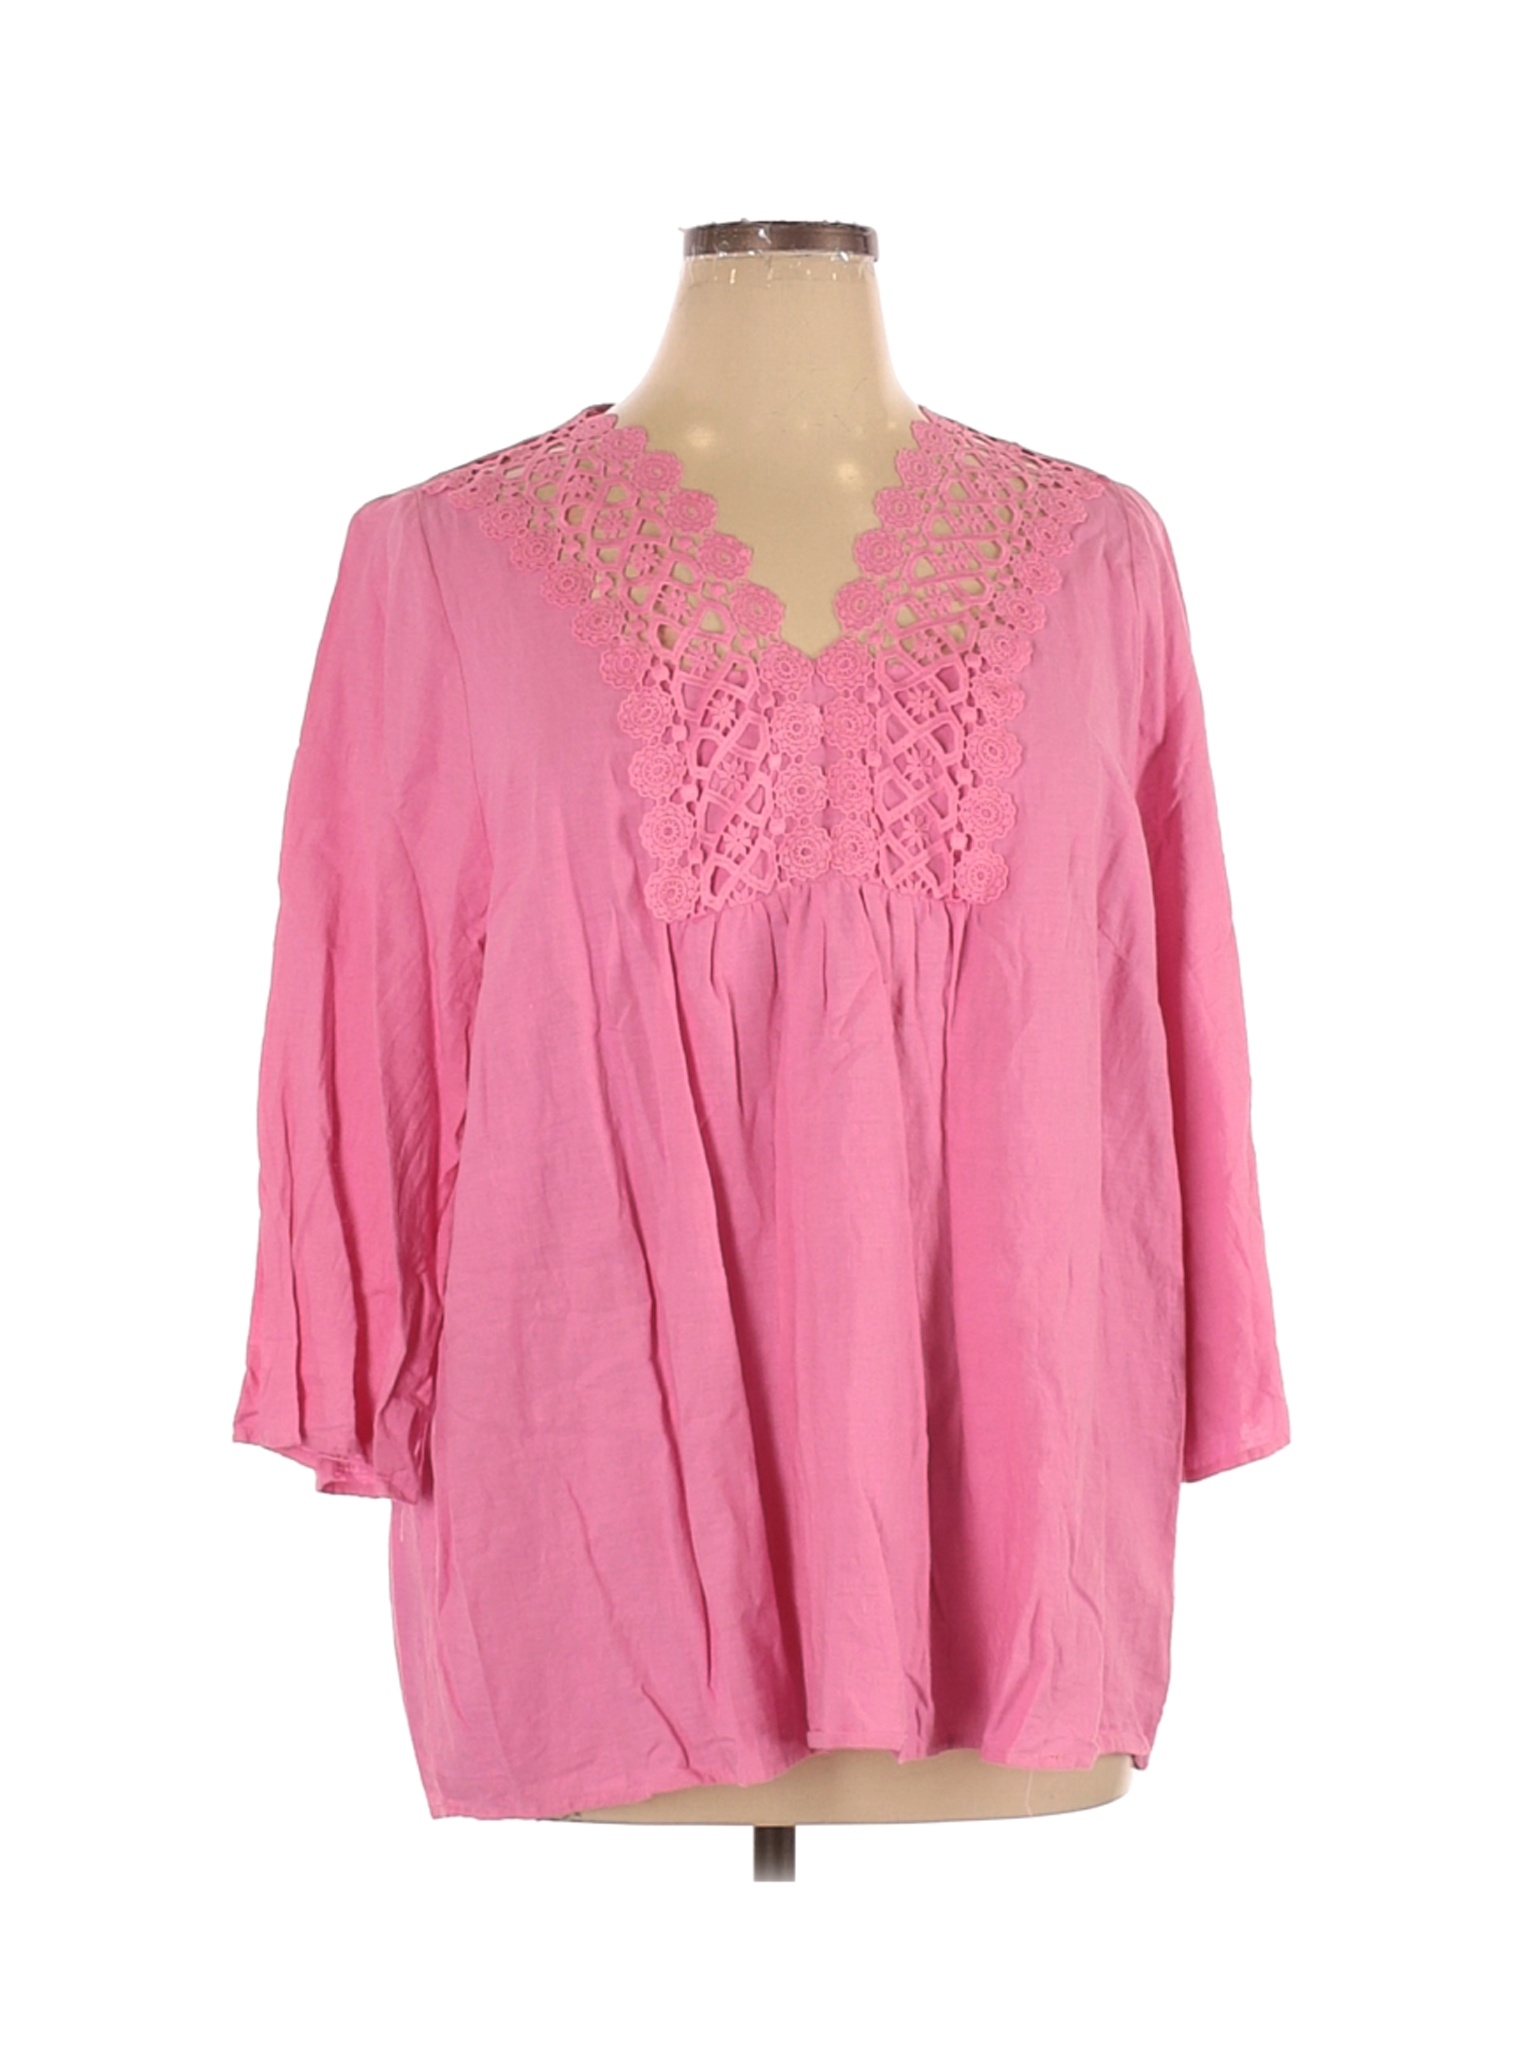 Adrienne Vittadini Women Pink 3/4 Sleeve Top 2X Plus | eBay